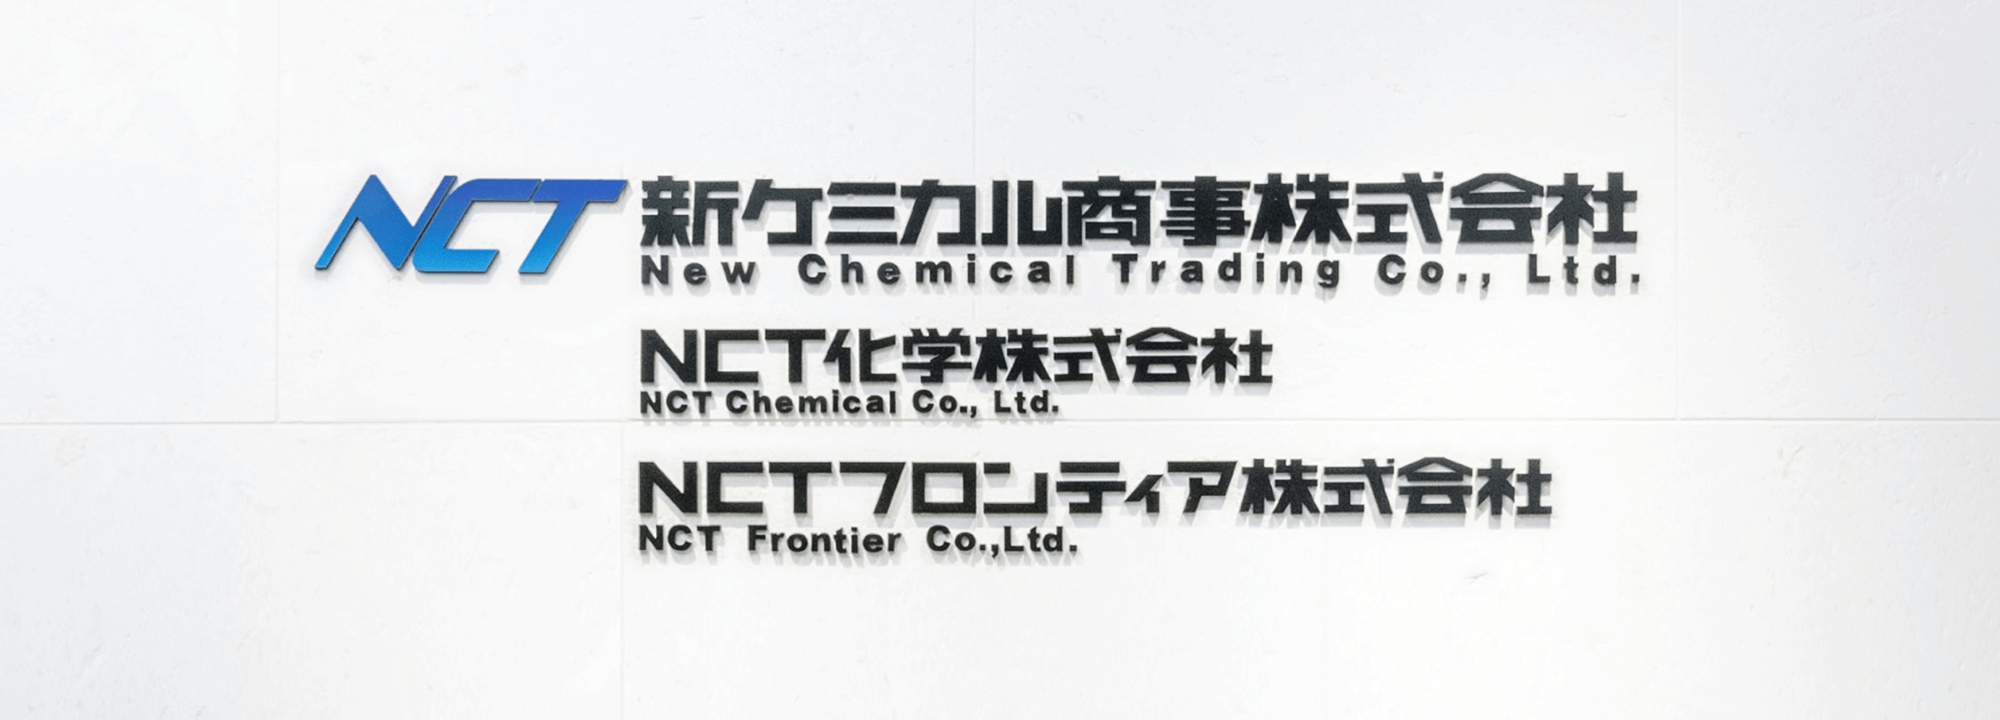 NCT新ケミカル商事株式会社 NCT化学株式会社 NCTフロンティア株式会社